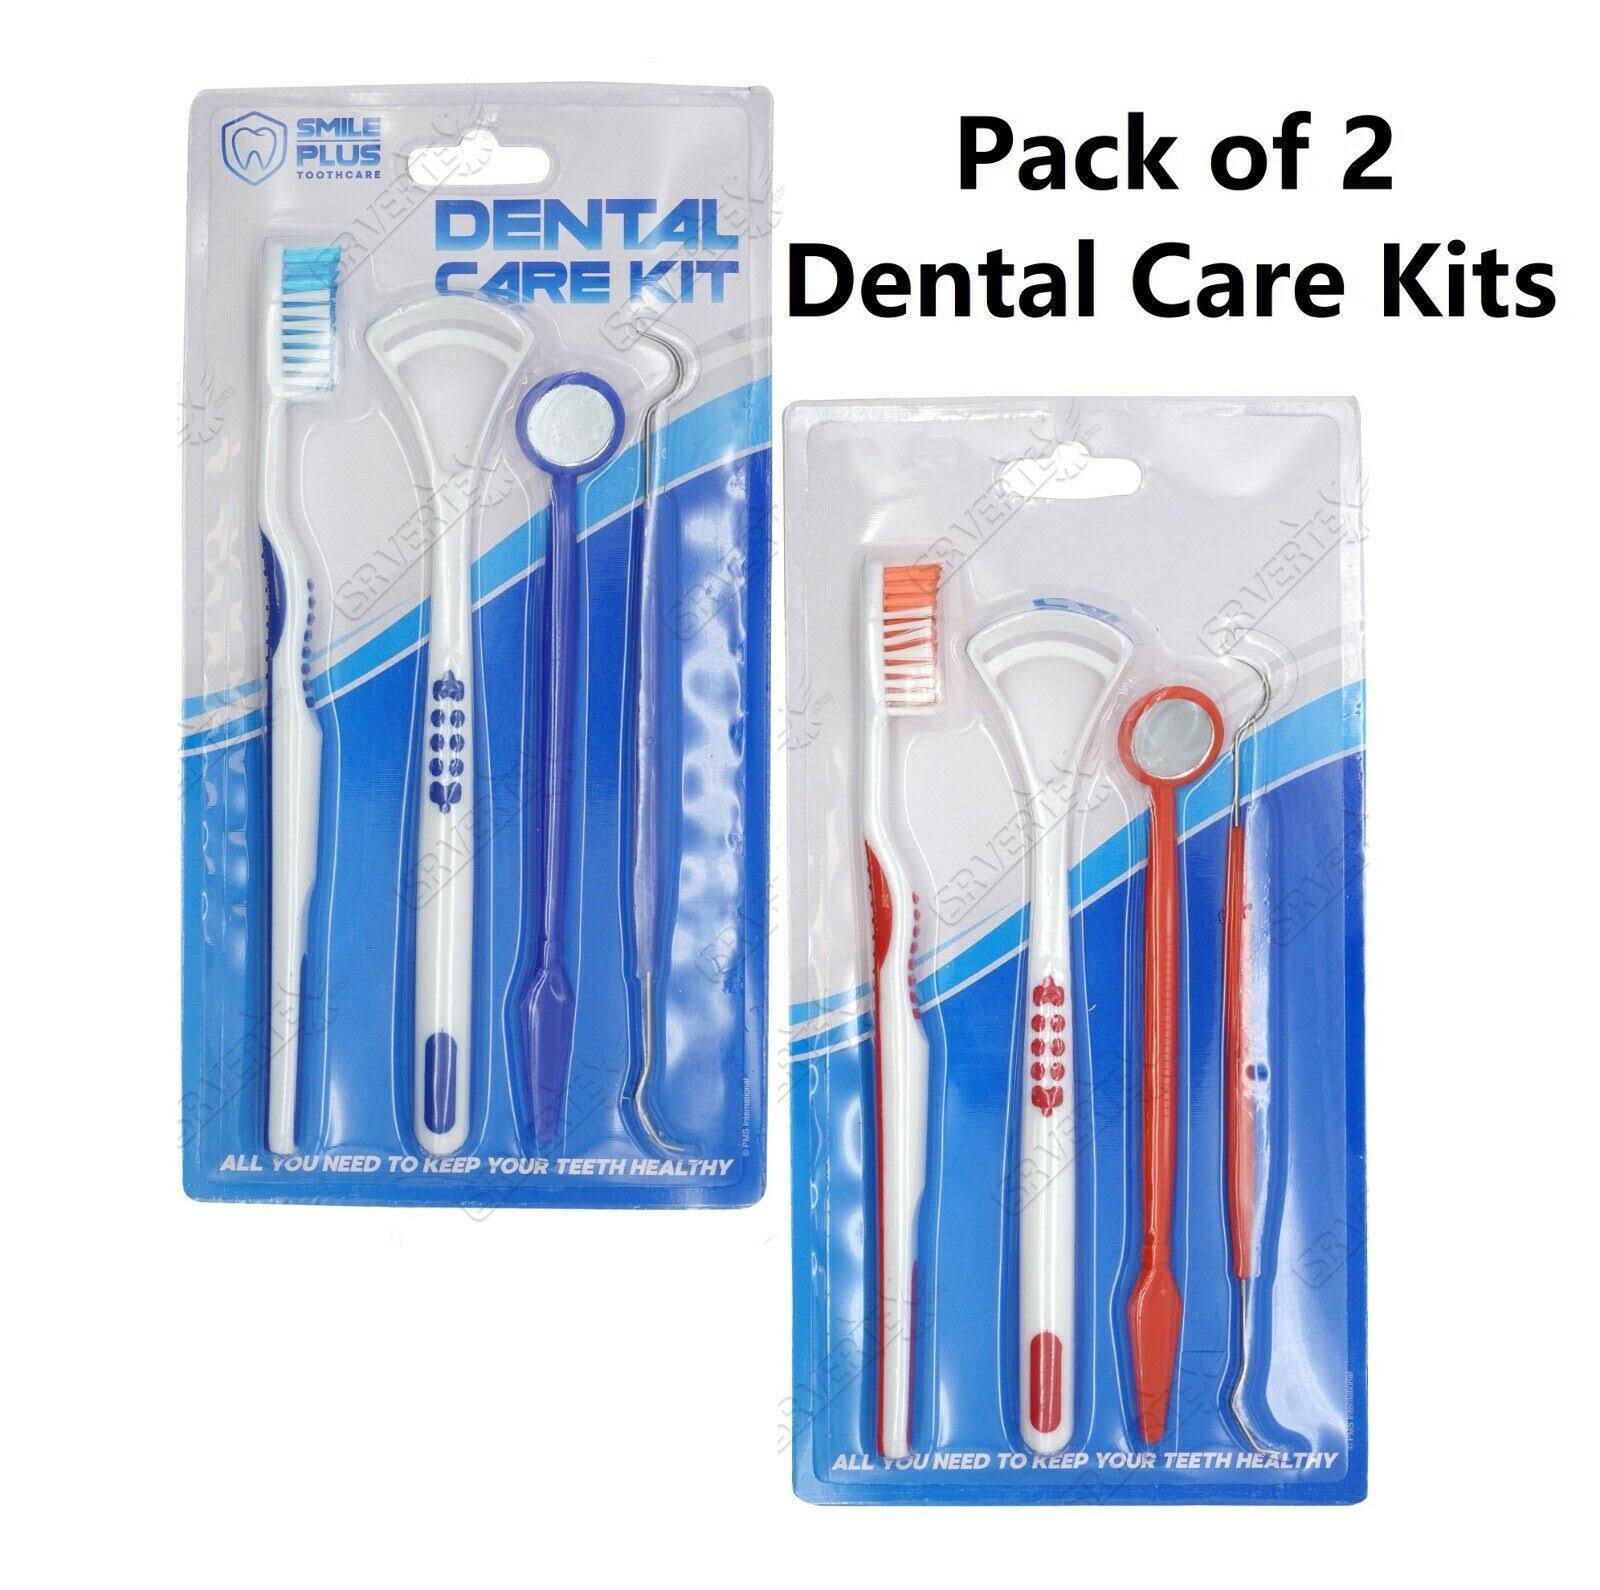 2x Pack Red Dental Care Kit Toothbrush, Dental Pick, Mirror & Tongue Cleaner Set